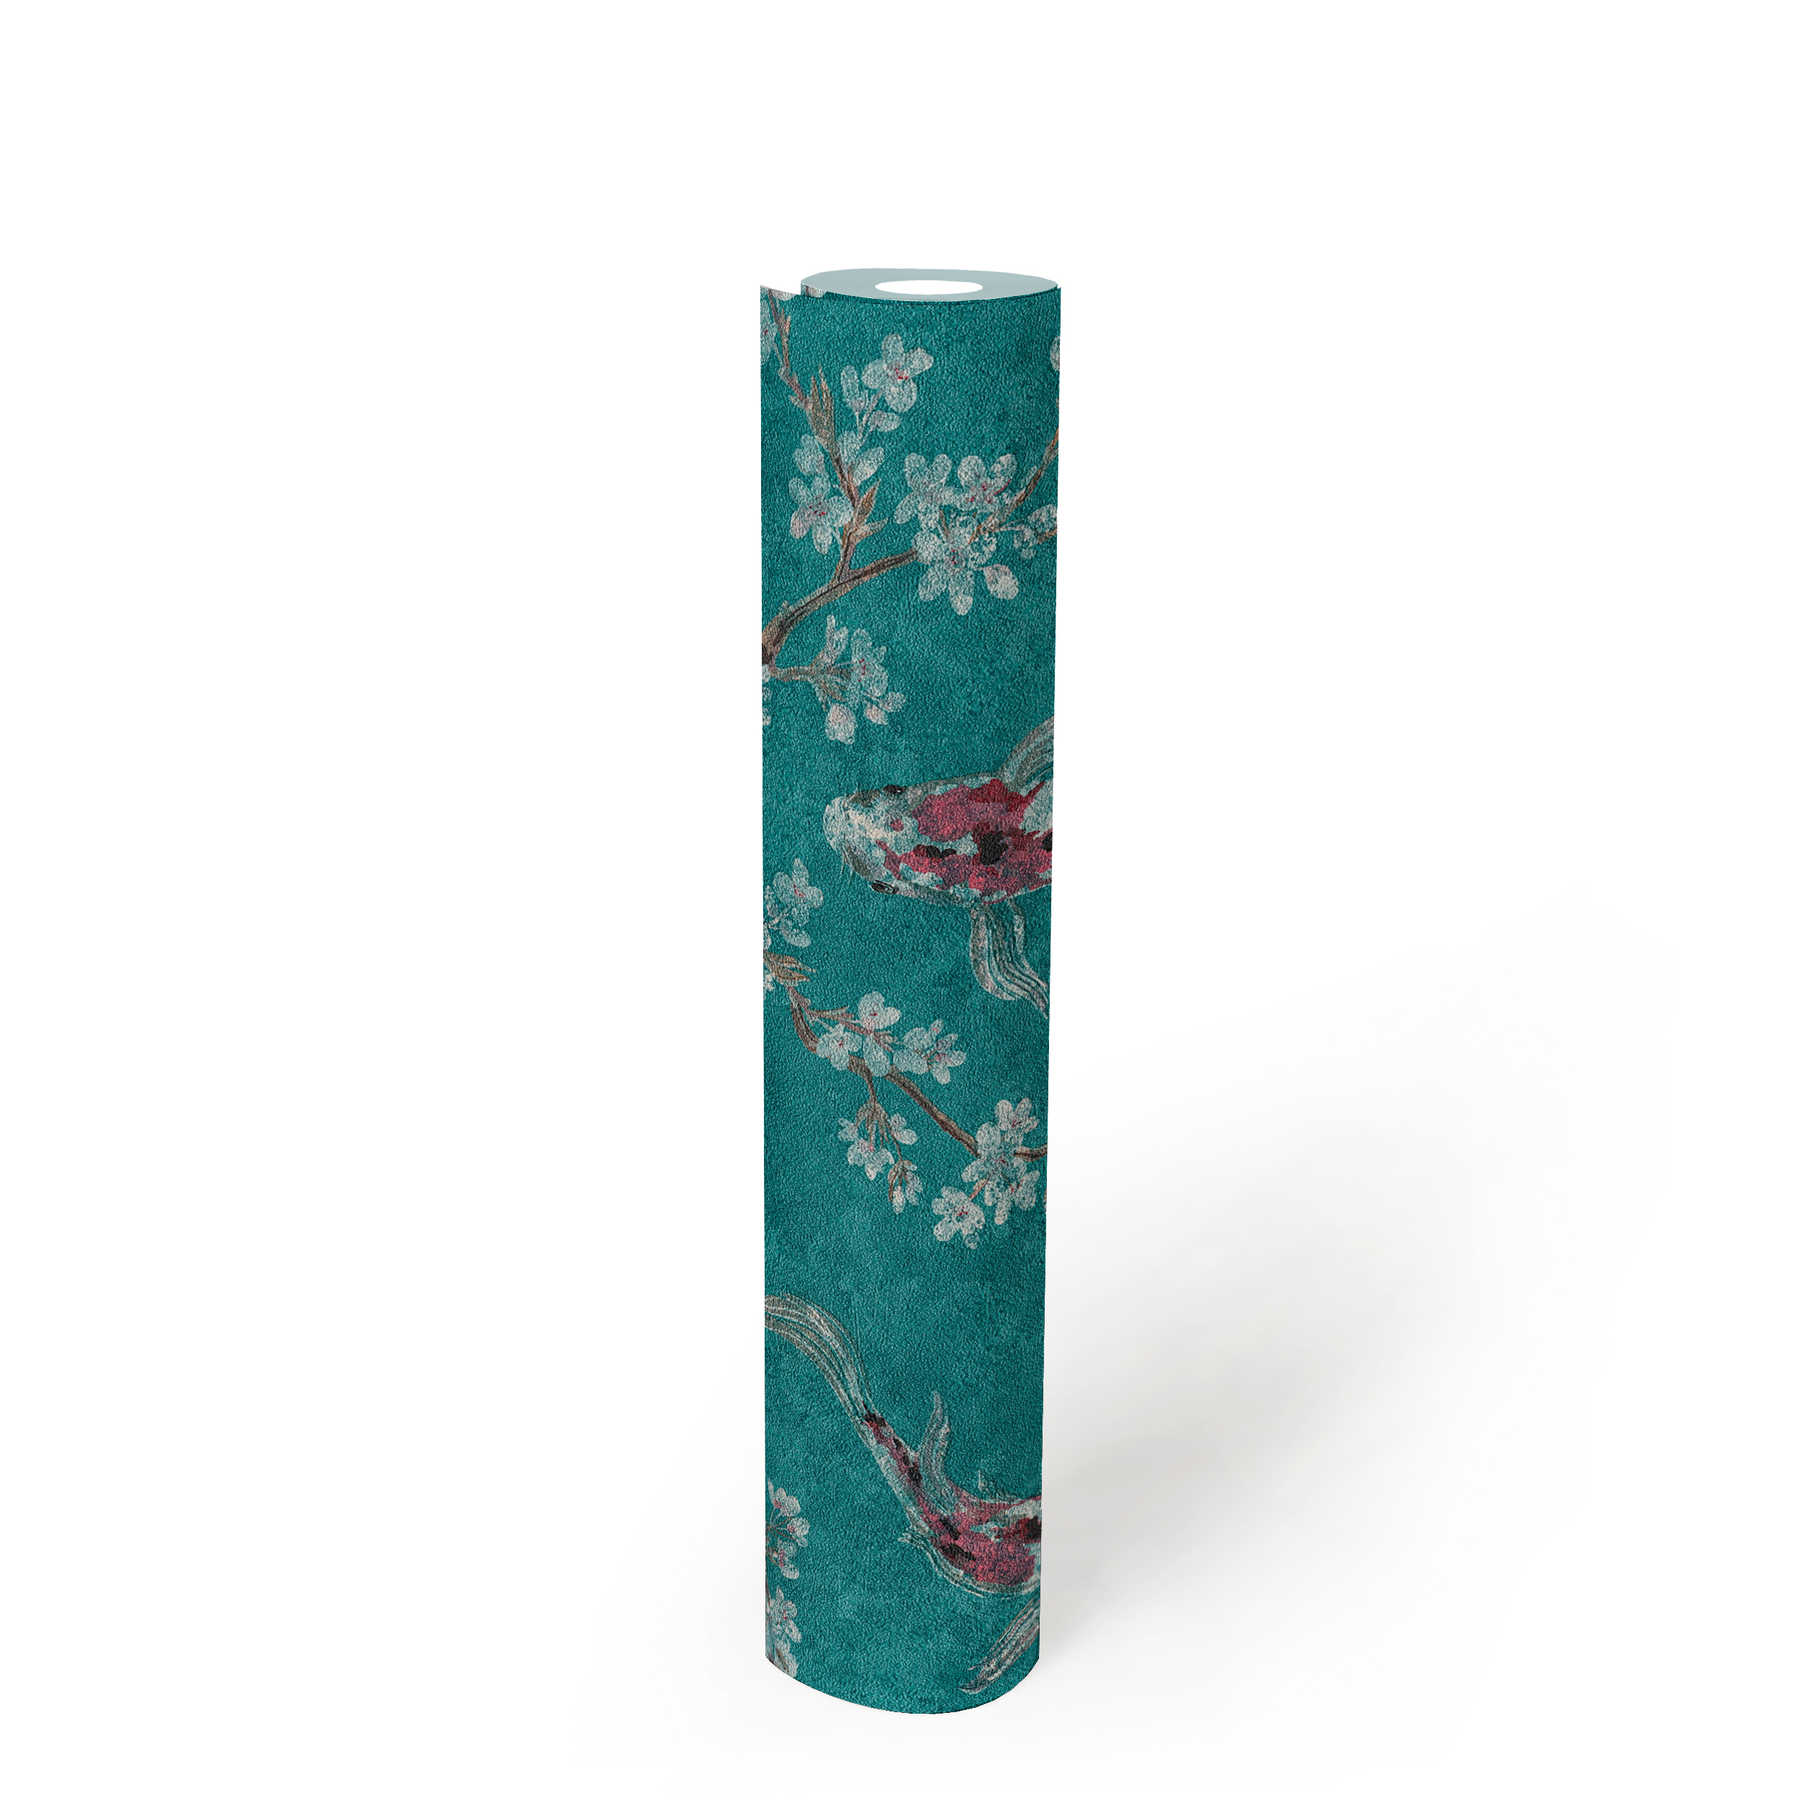             Papel pintado no tejido de estilo asiático con motivos koi - azul, verde, rojo
        